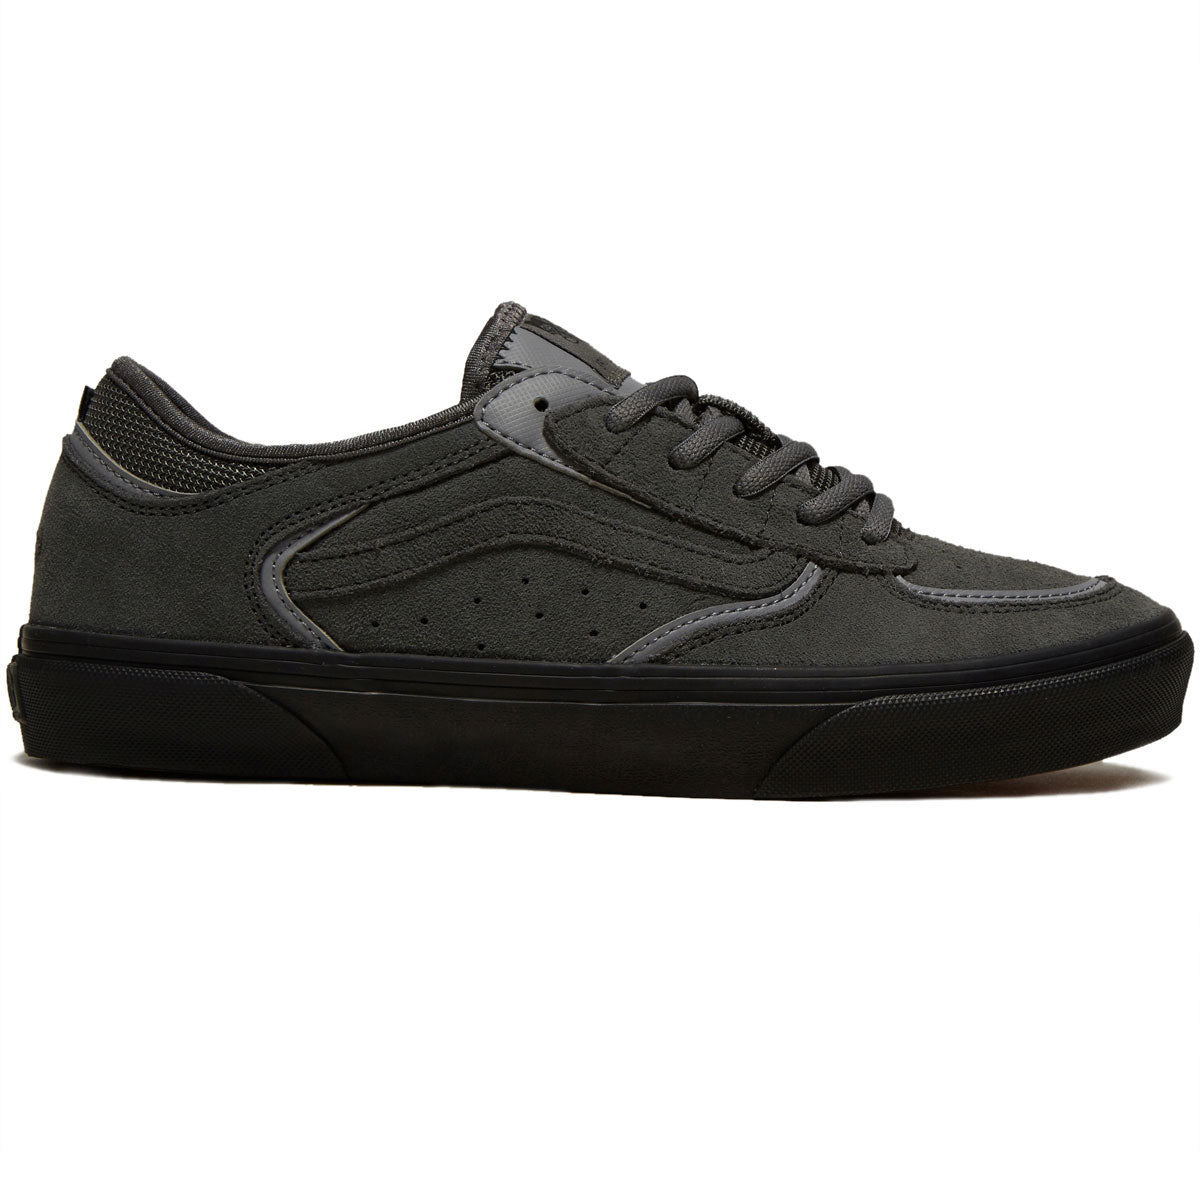 Vans Skate Rowley Shoes - Suede Charcoal/Black image 1